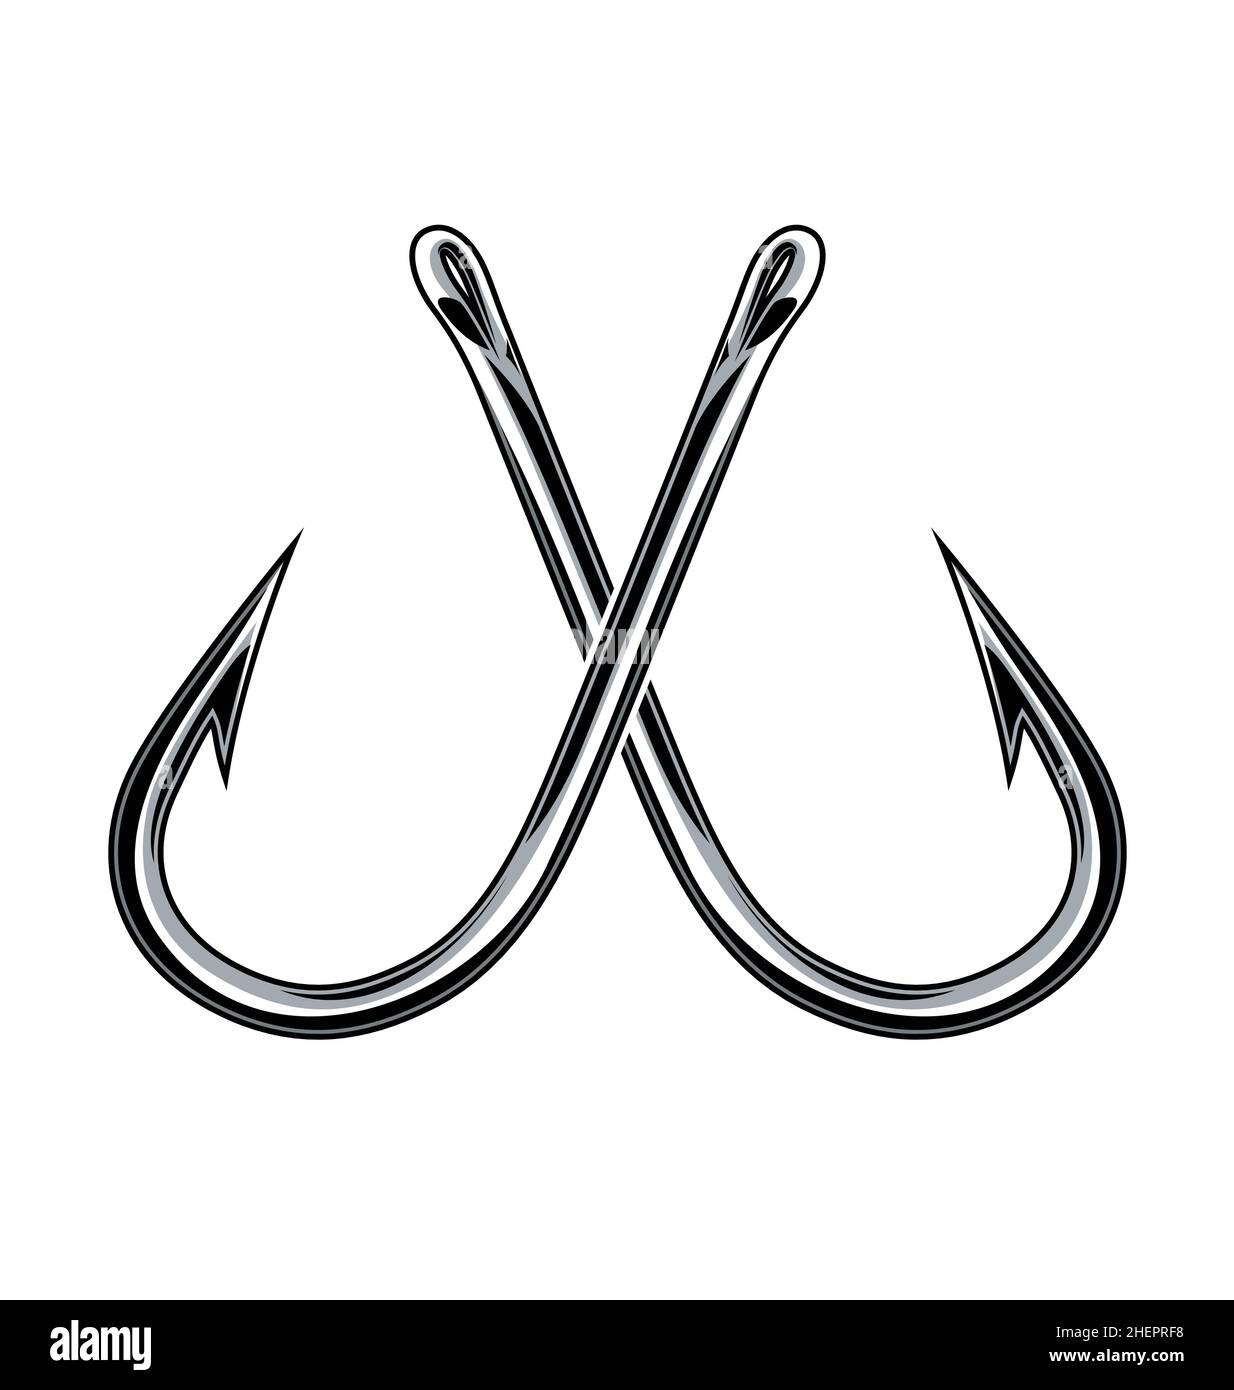 simple crossed steel fishing fish hooks chrome steel metal